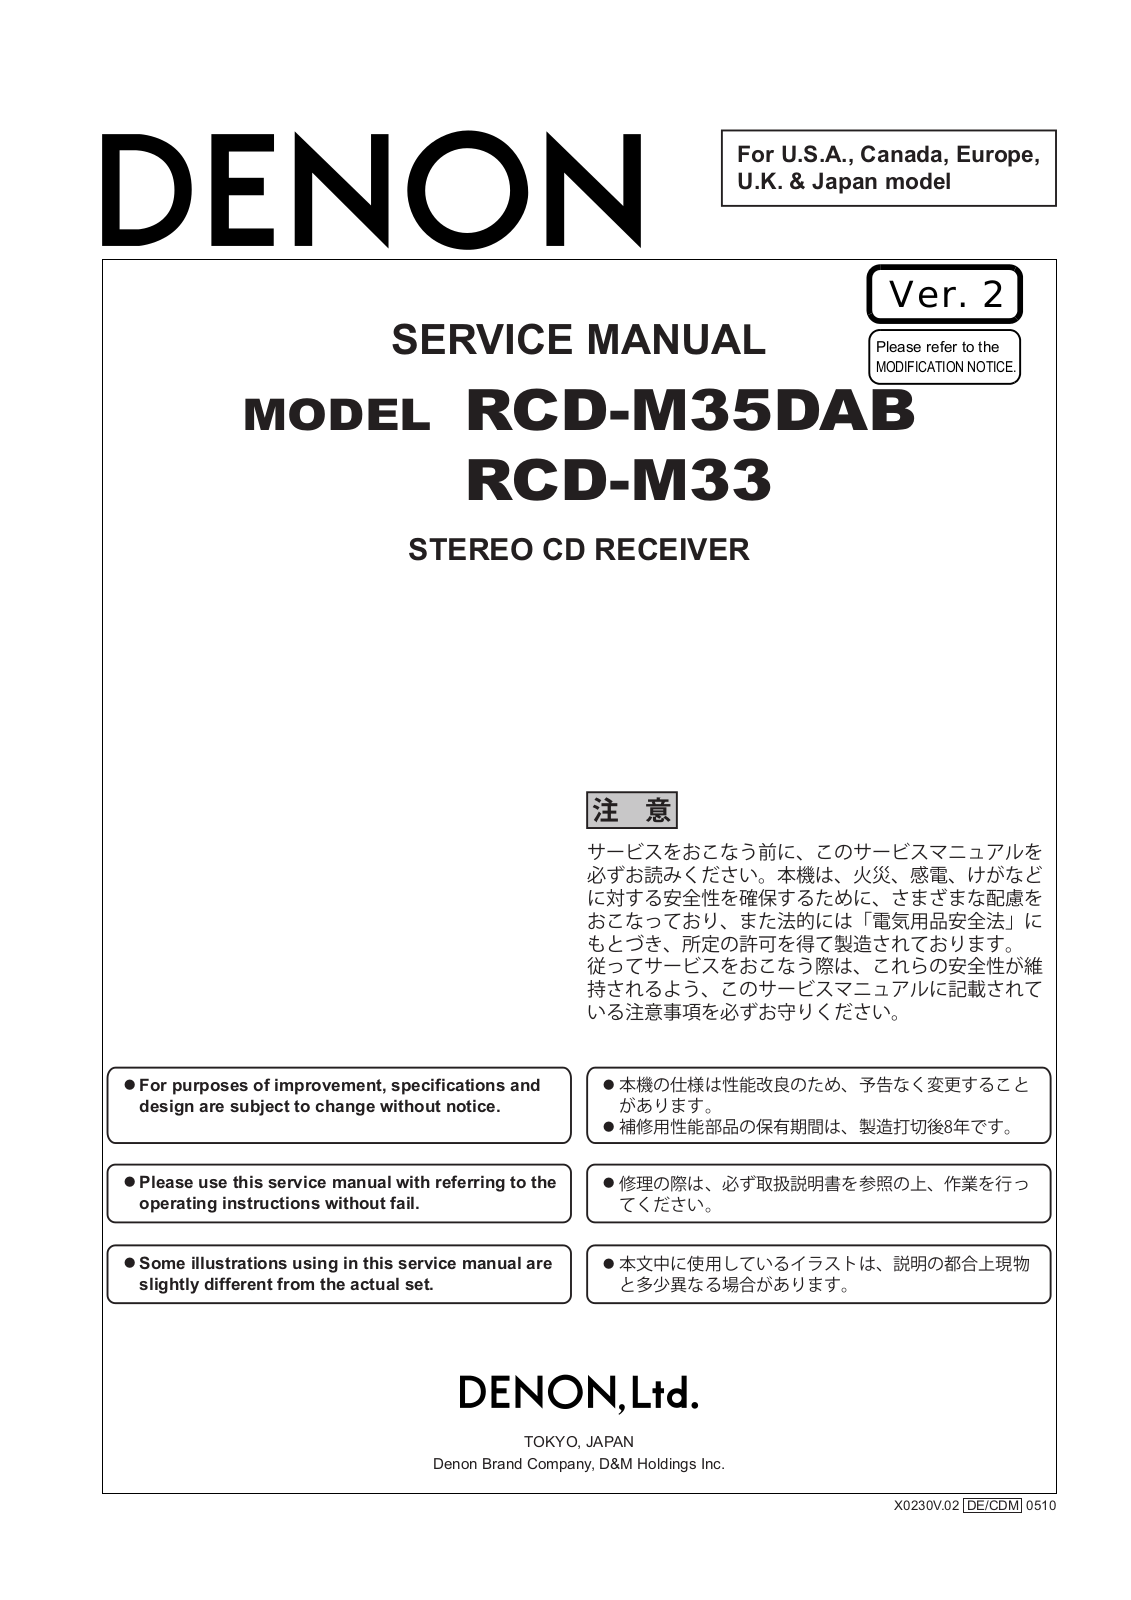 Denon RCD-M33, RCD-M33DAB Service Manual